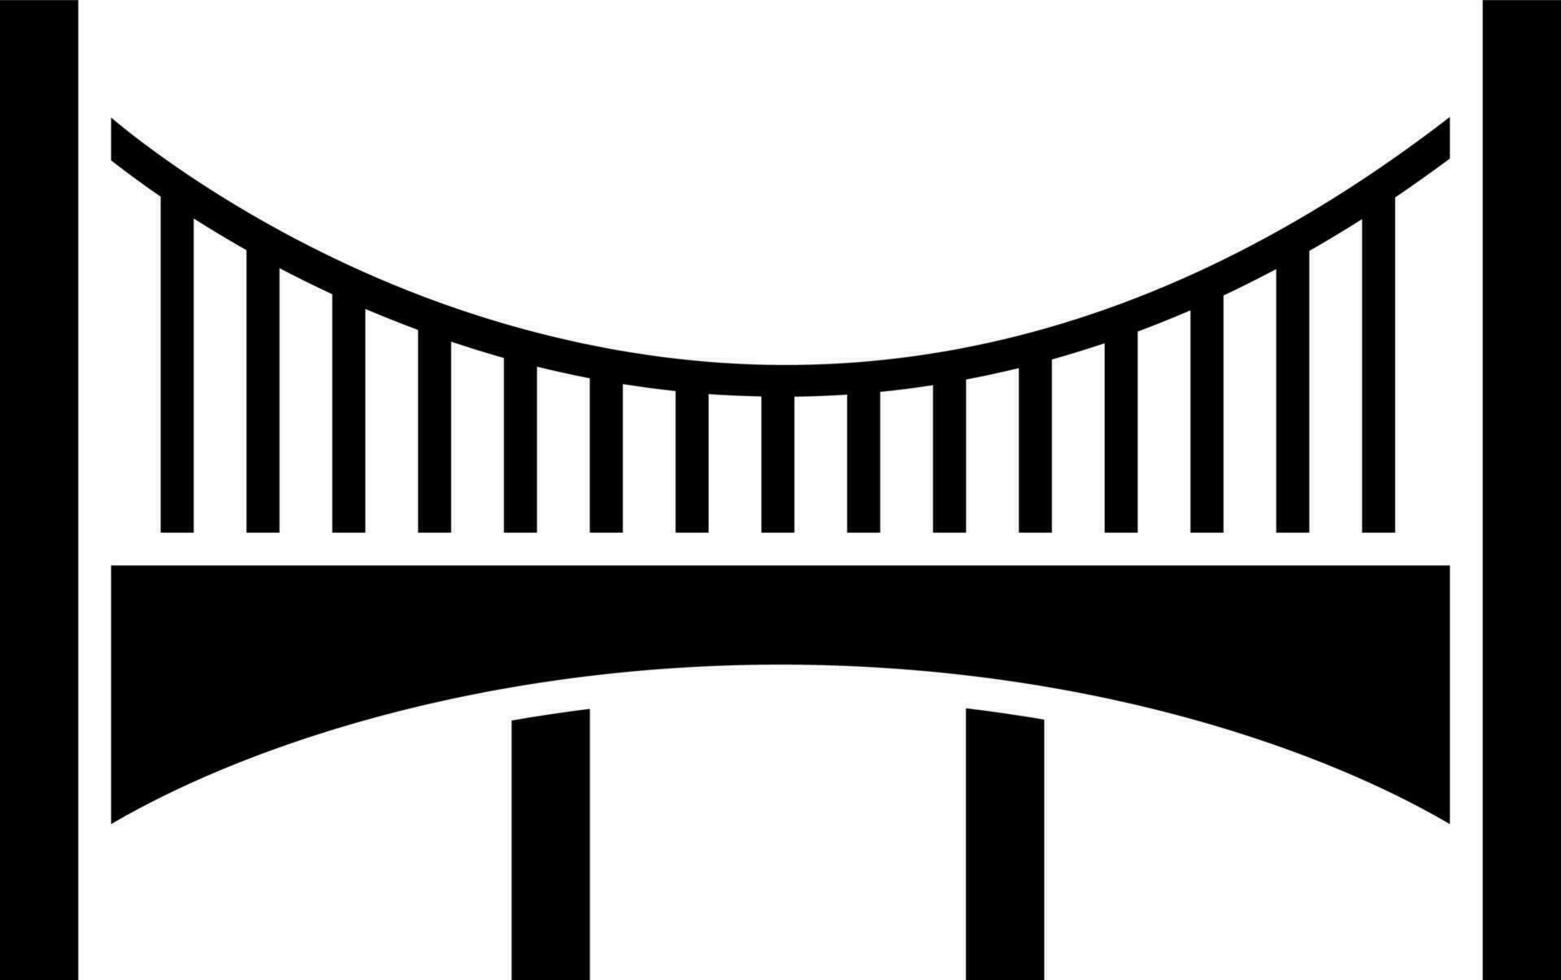 Flat style bridge sign or symbol. vector